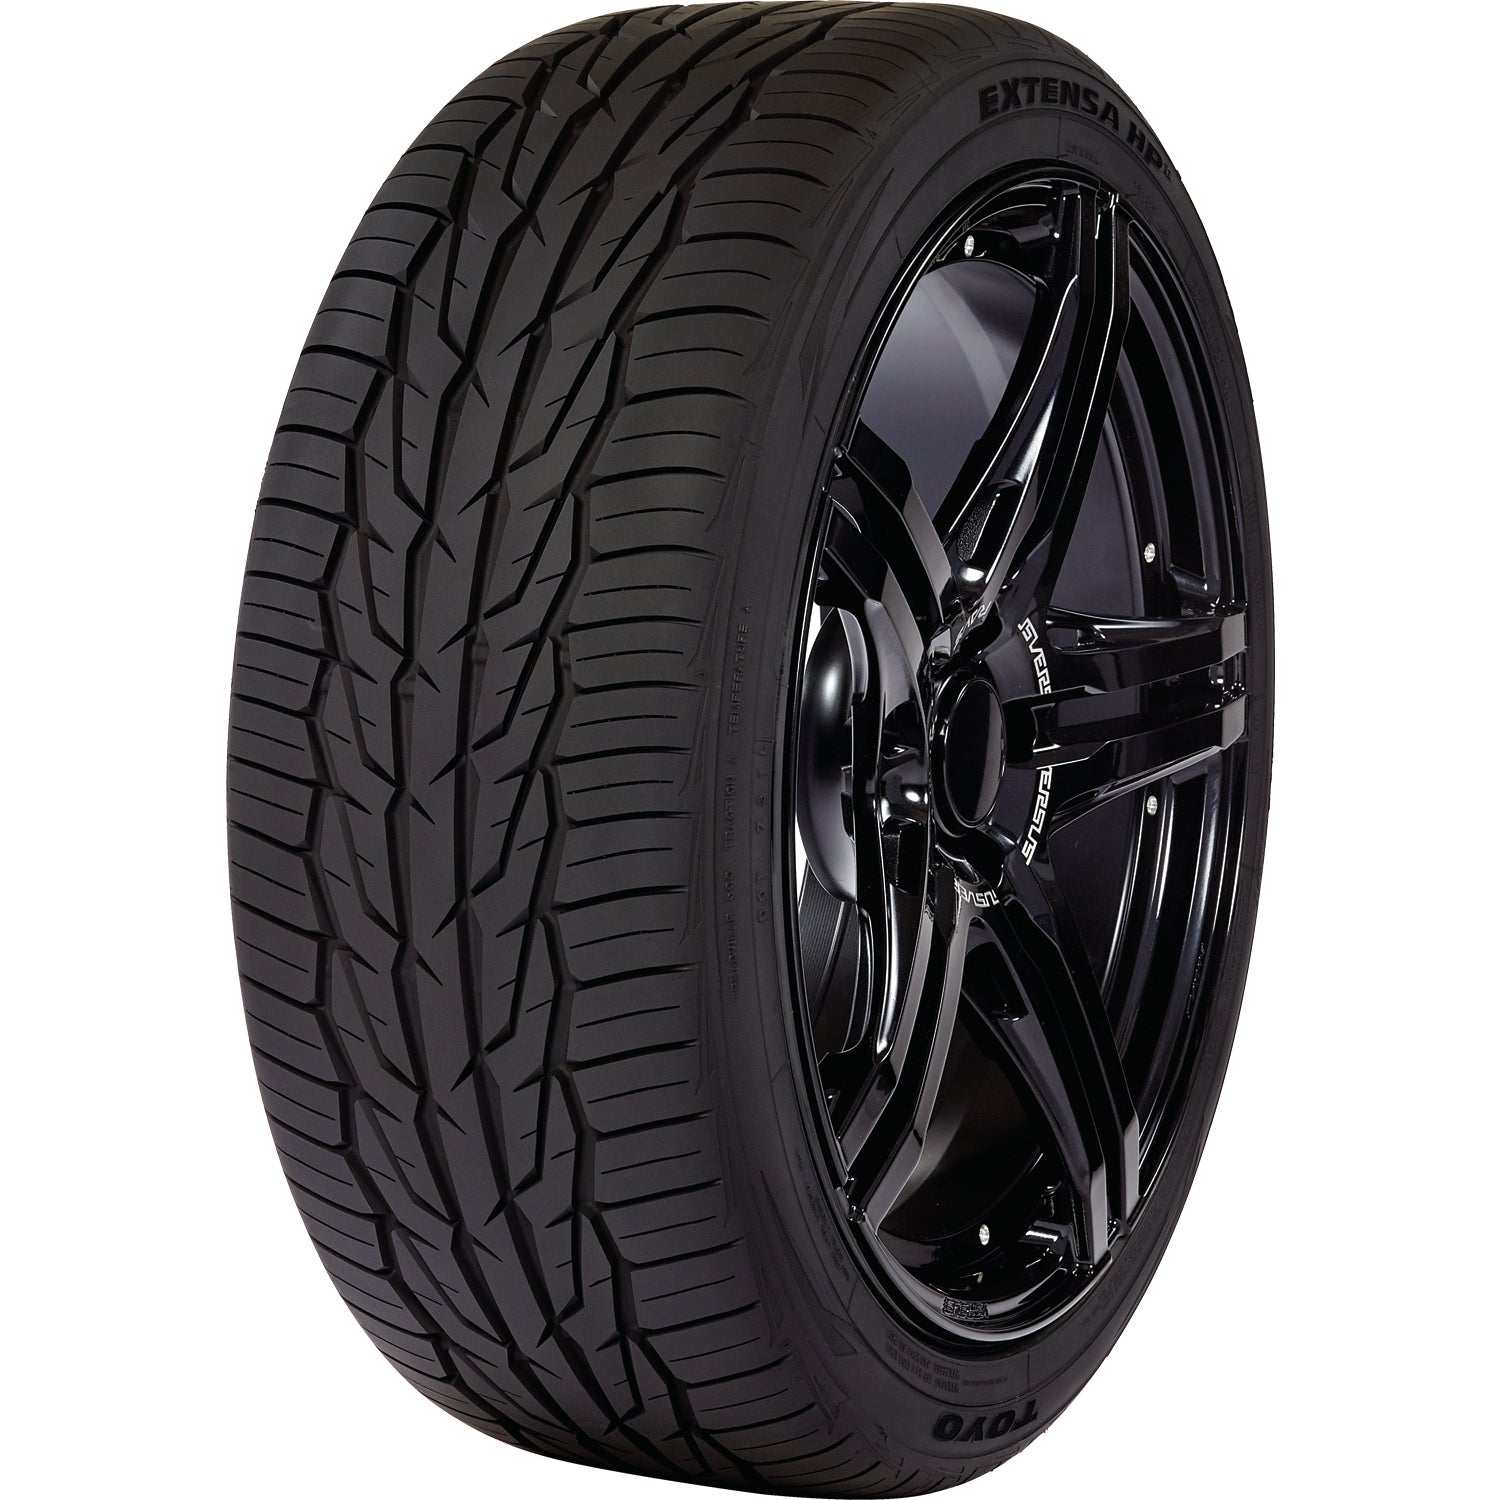 TOYO TIRES EXTENSA HP II 235/45R17 (25.4X9.3R 17) Tires